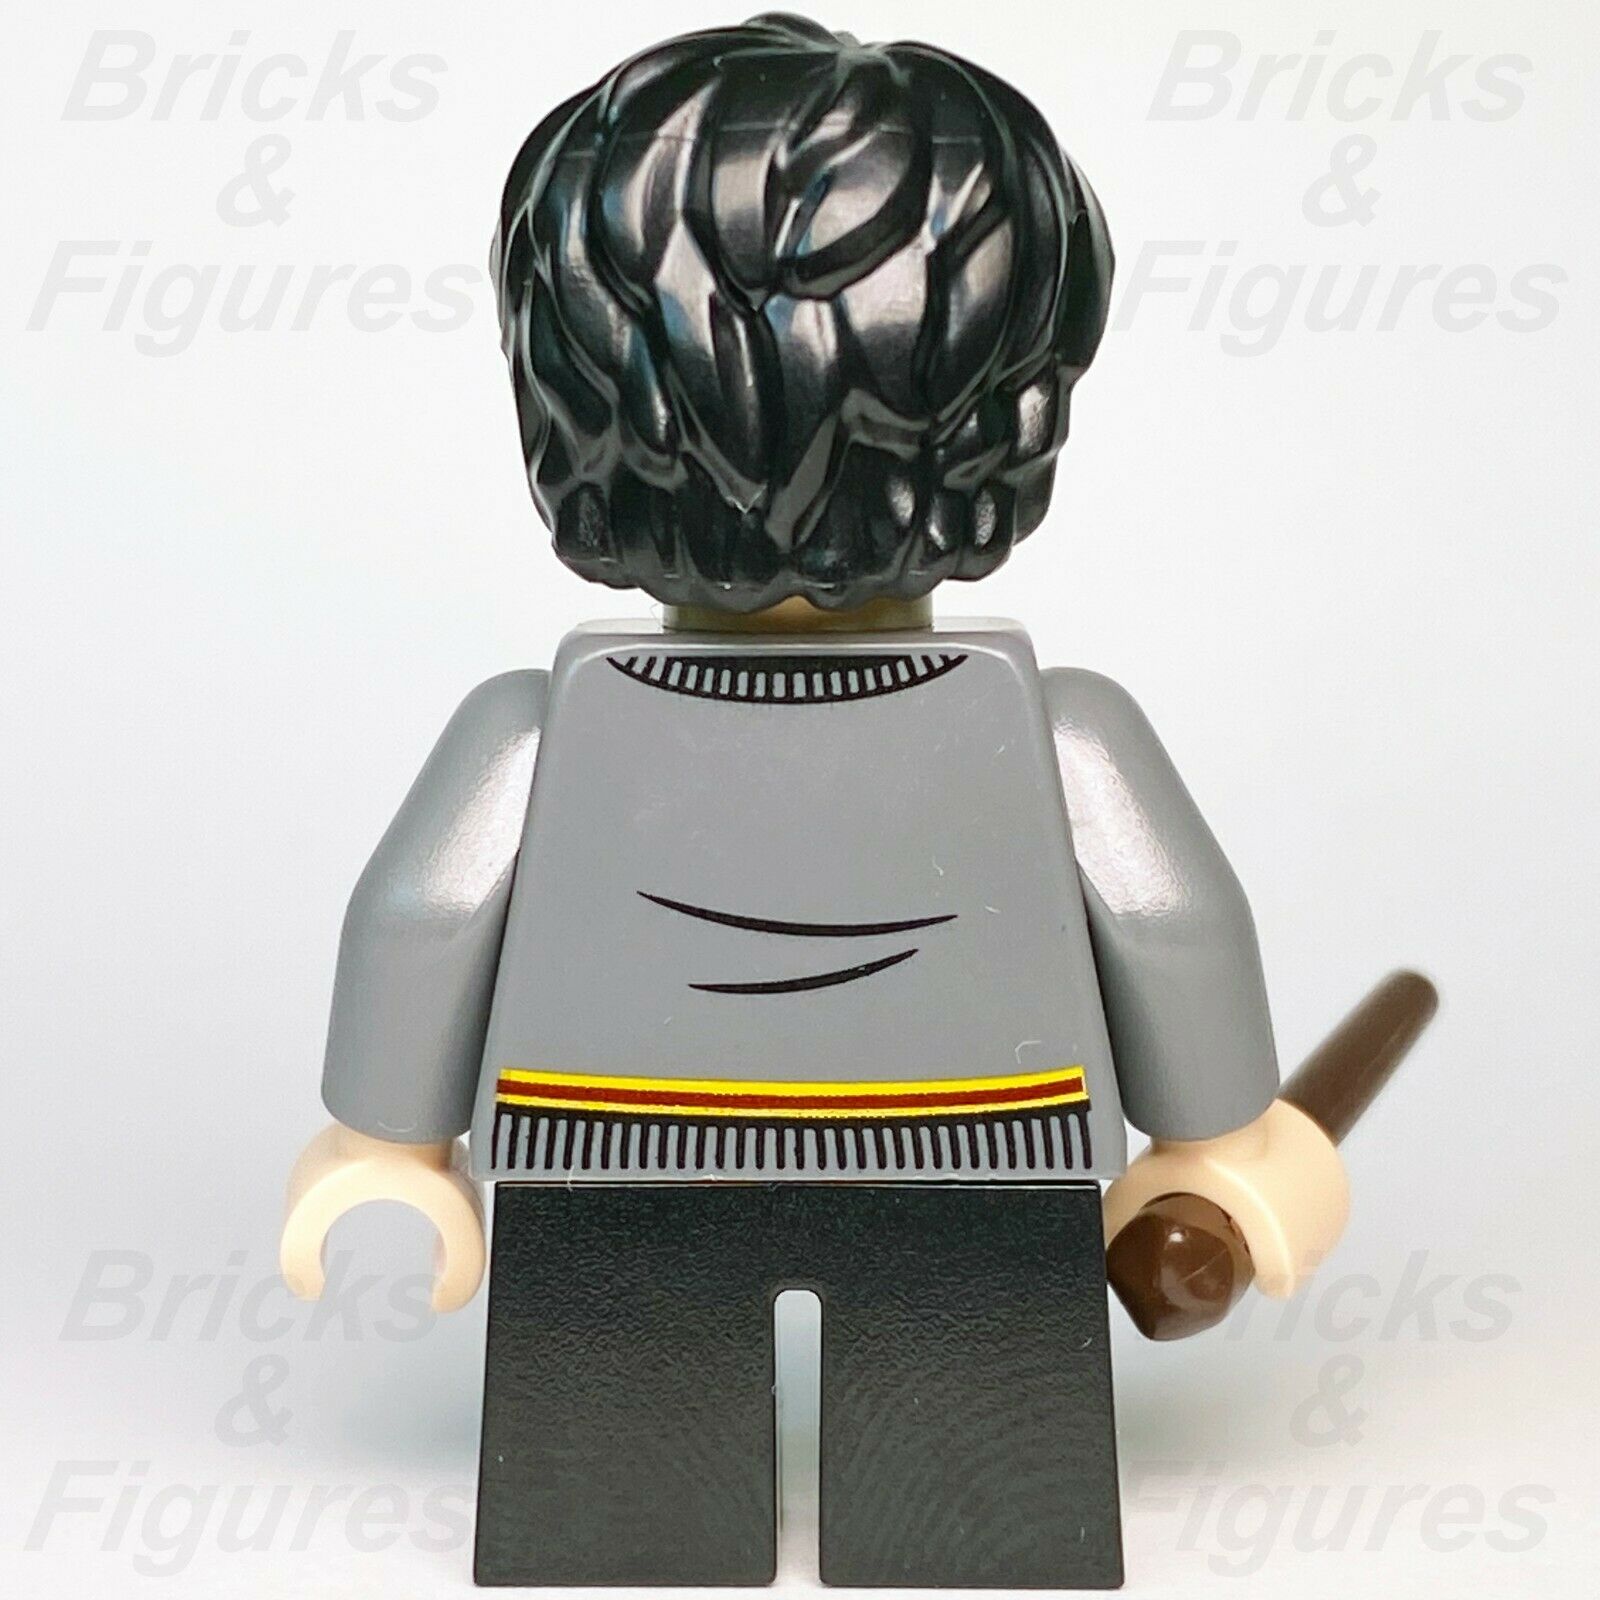 New LEGO® Harry Potter in Gryffindor Sweater Wizard Minifigure 75954 30407 11923 - Bricks & Figures